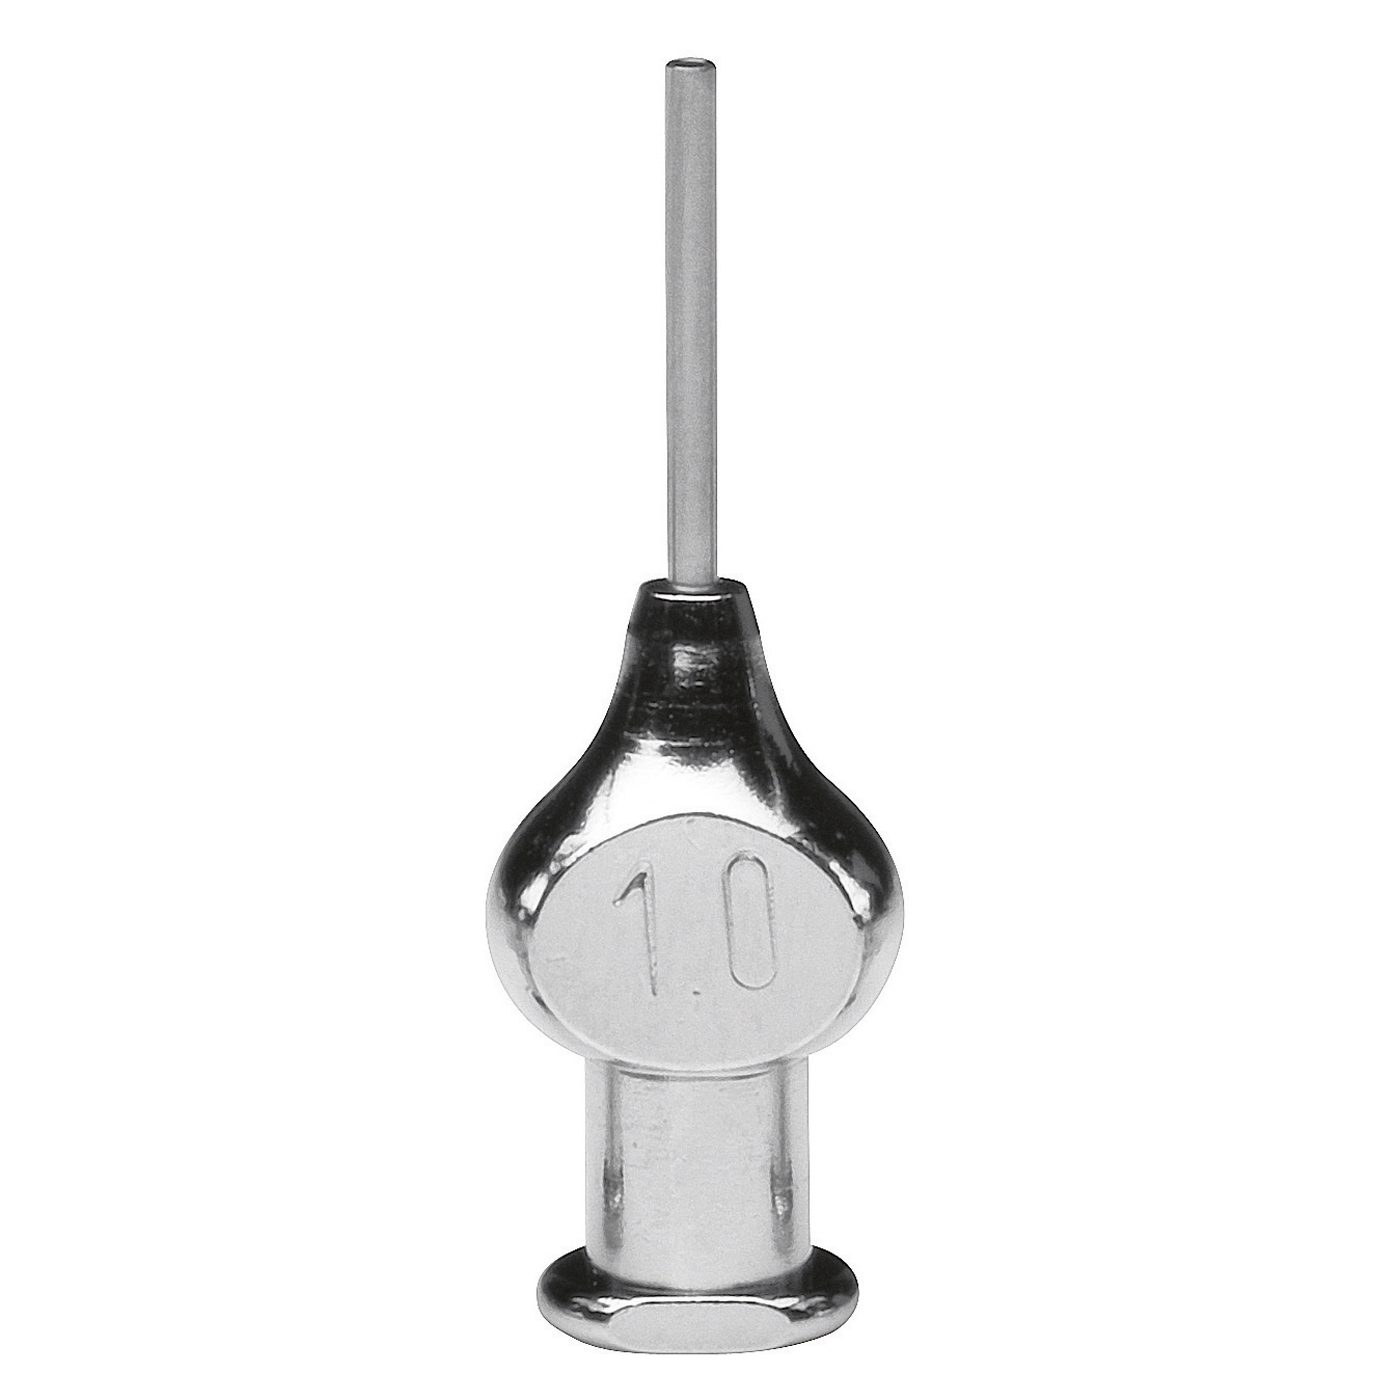 microflame burner nozzles, ø 1,0 x 10 mm (G19) - 5 pieces